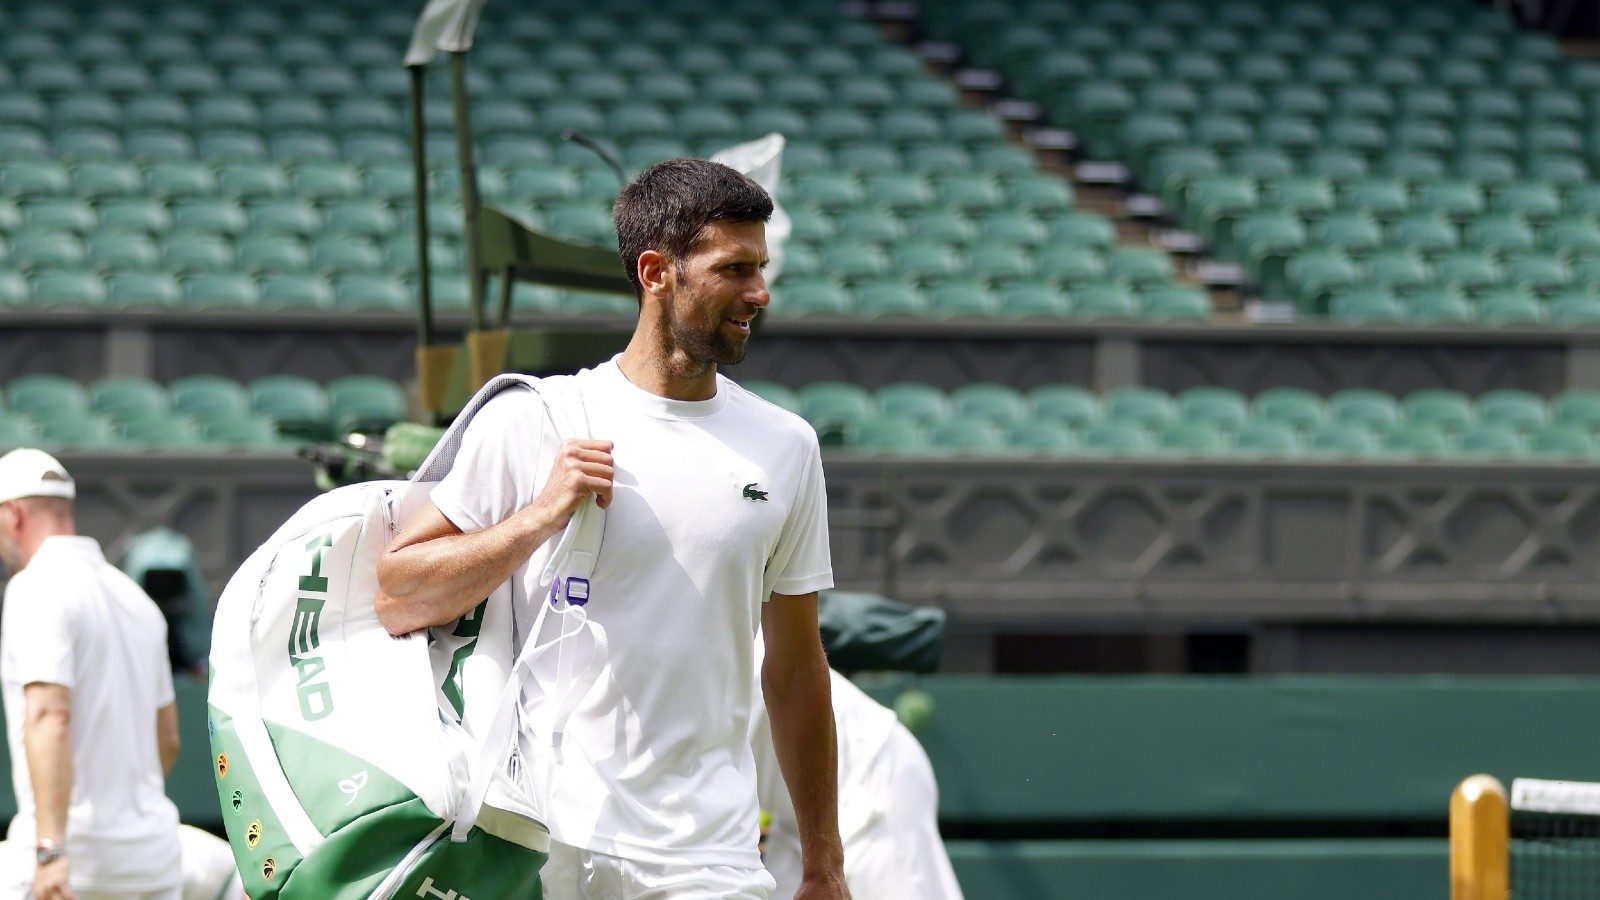 Wimbledon 2022 Novak Djokovic Repeats No Vaccination Stance as US Open Slips Away